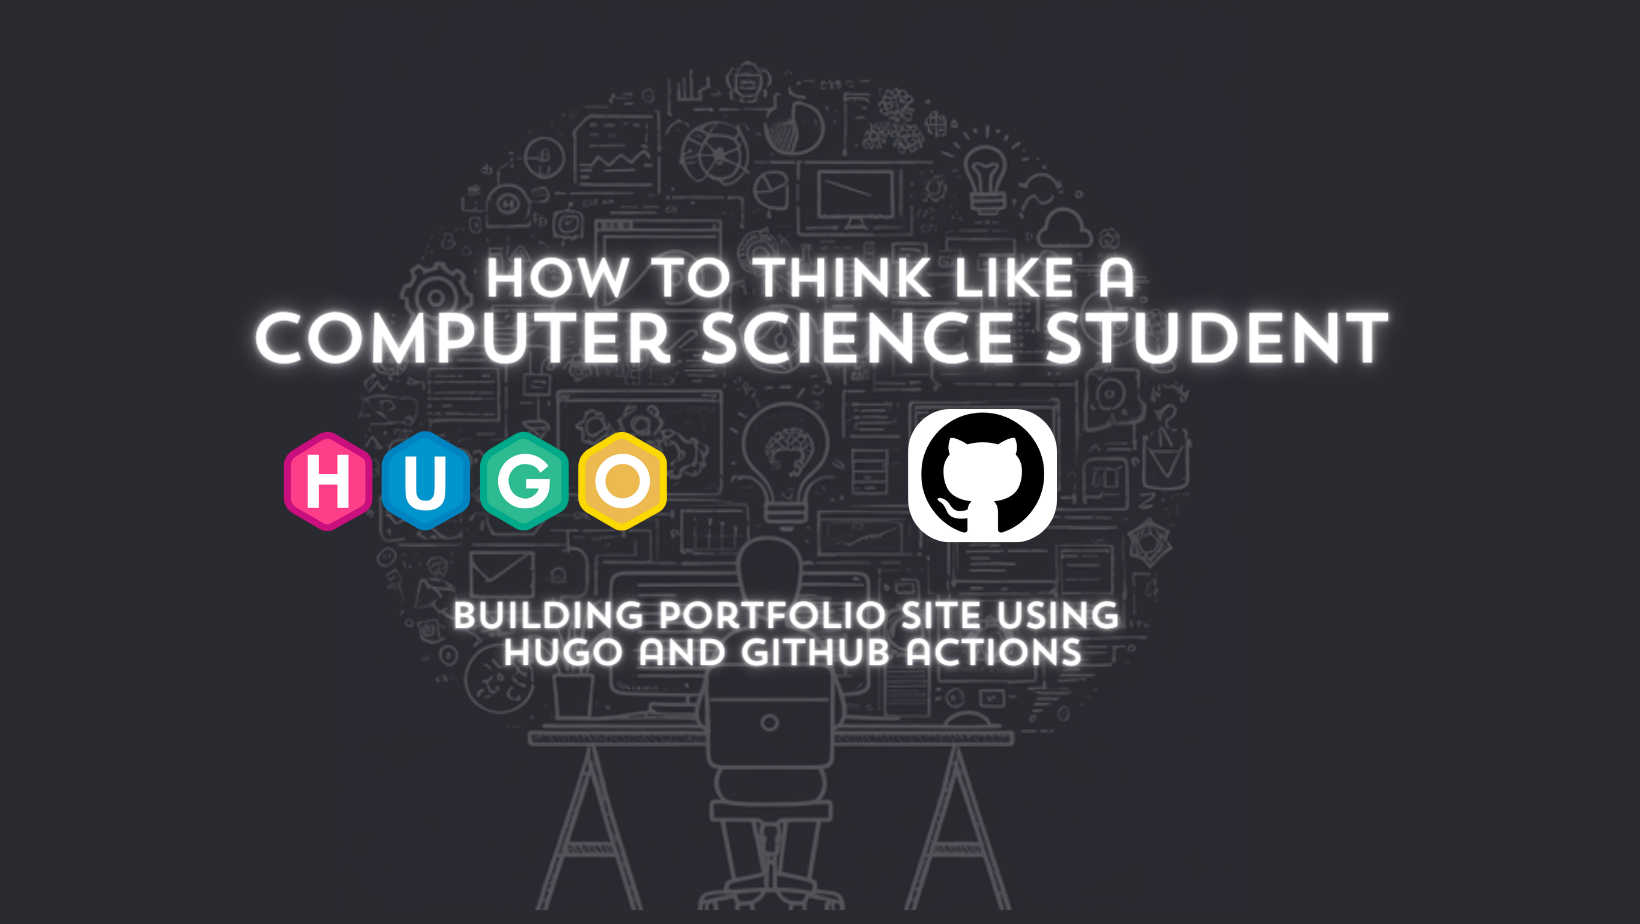 Building Your Portfolio Site with Hugo and GitHub